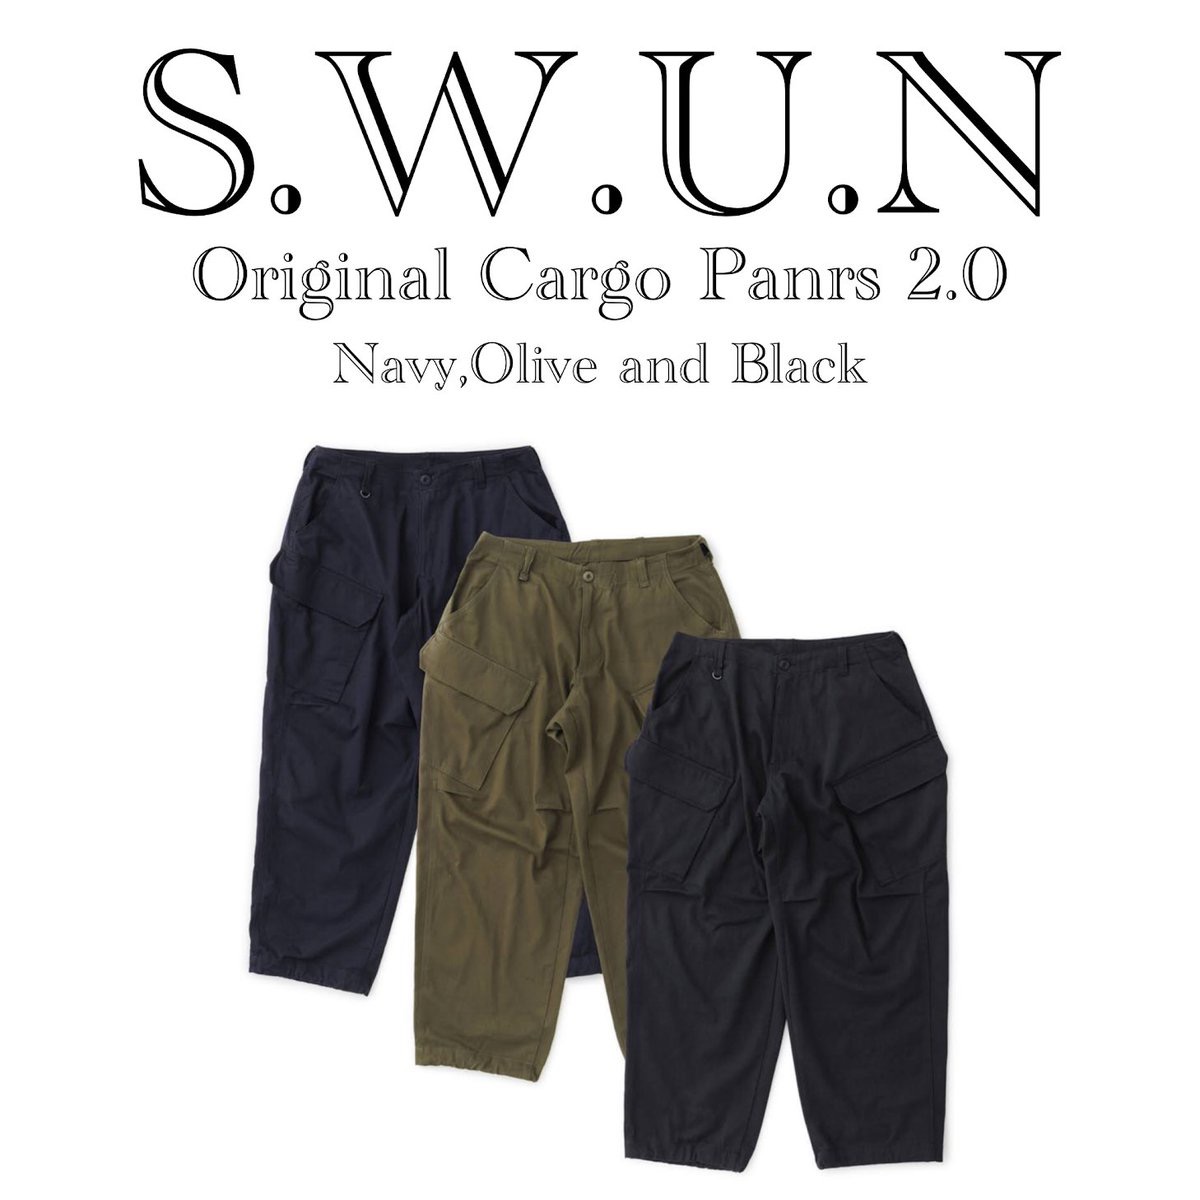 S.W.U.N 『Original Cargo Pants 2.0』の抽選販売受付が3月22日まで 